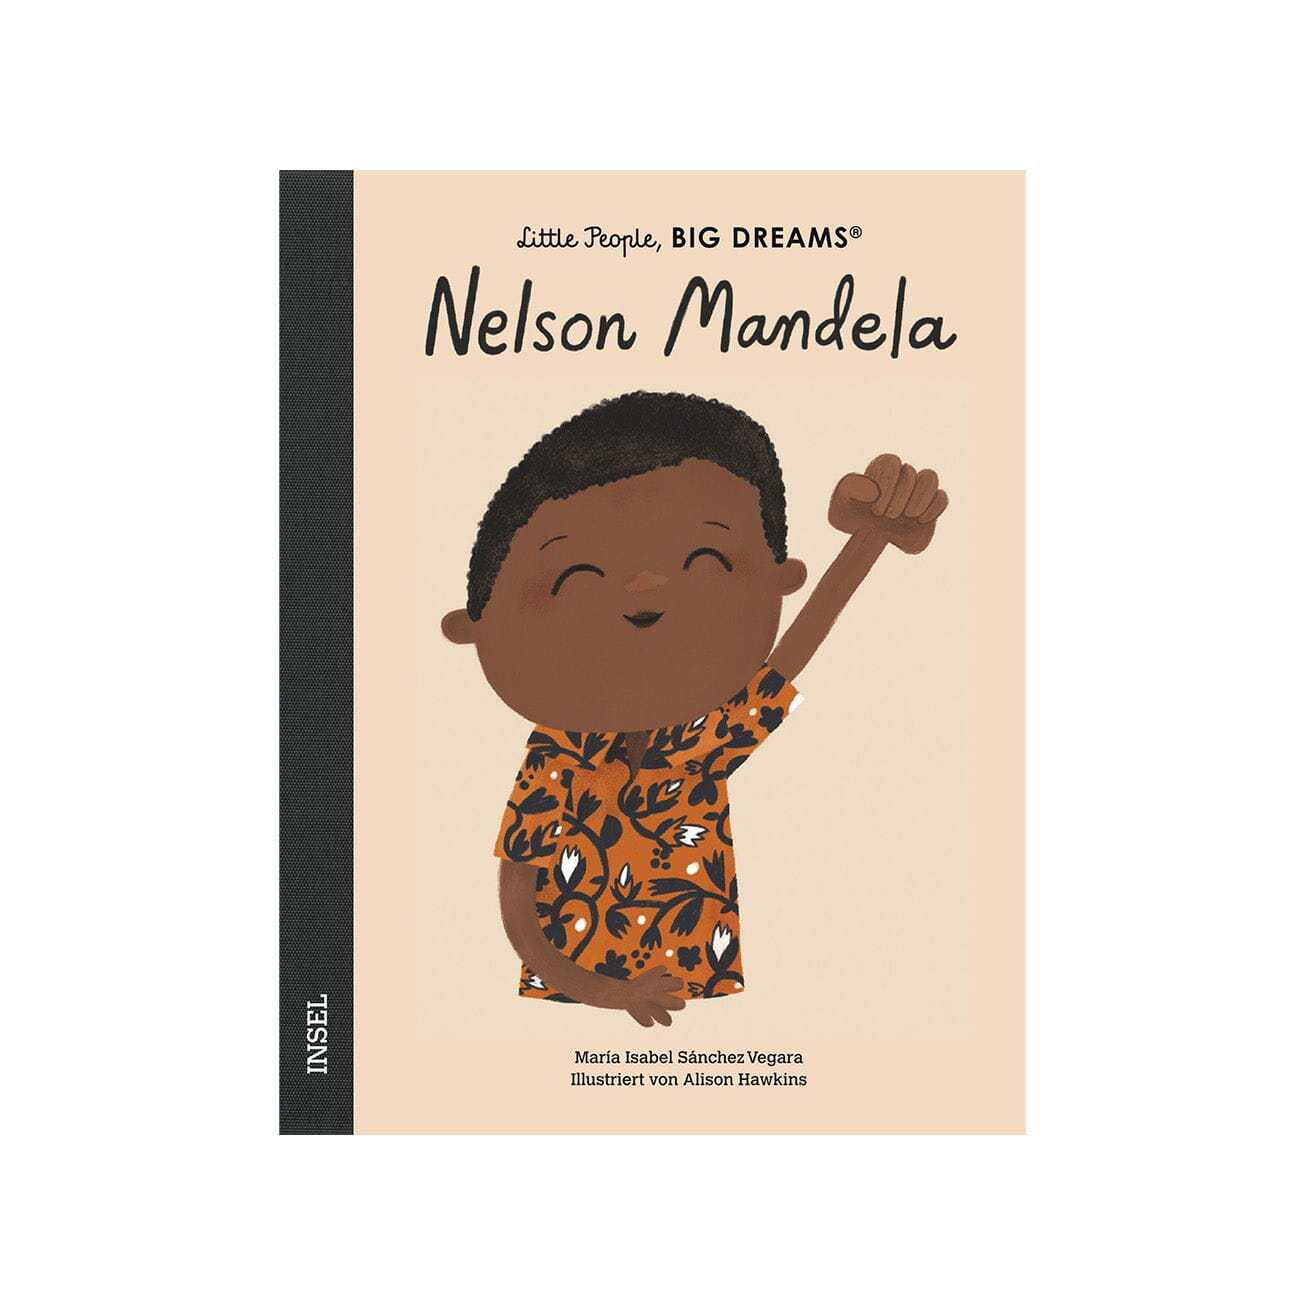 Little People, Big Dreams "Nelson Mandela" Buch Insel Verlag 